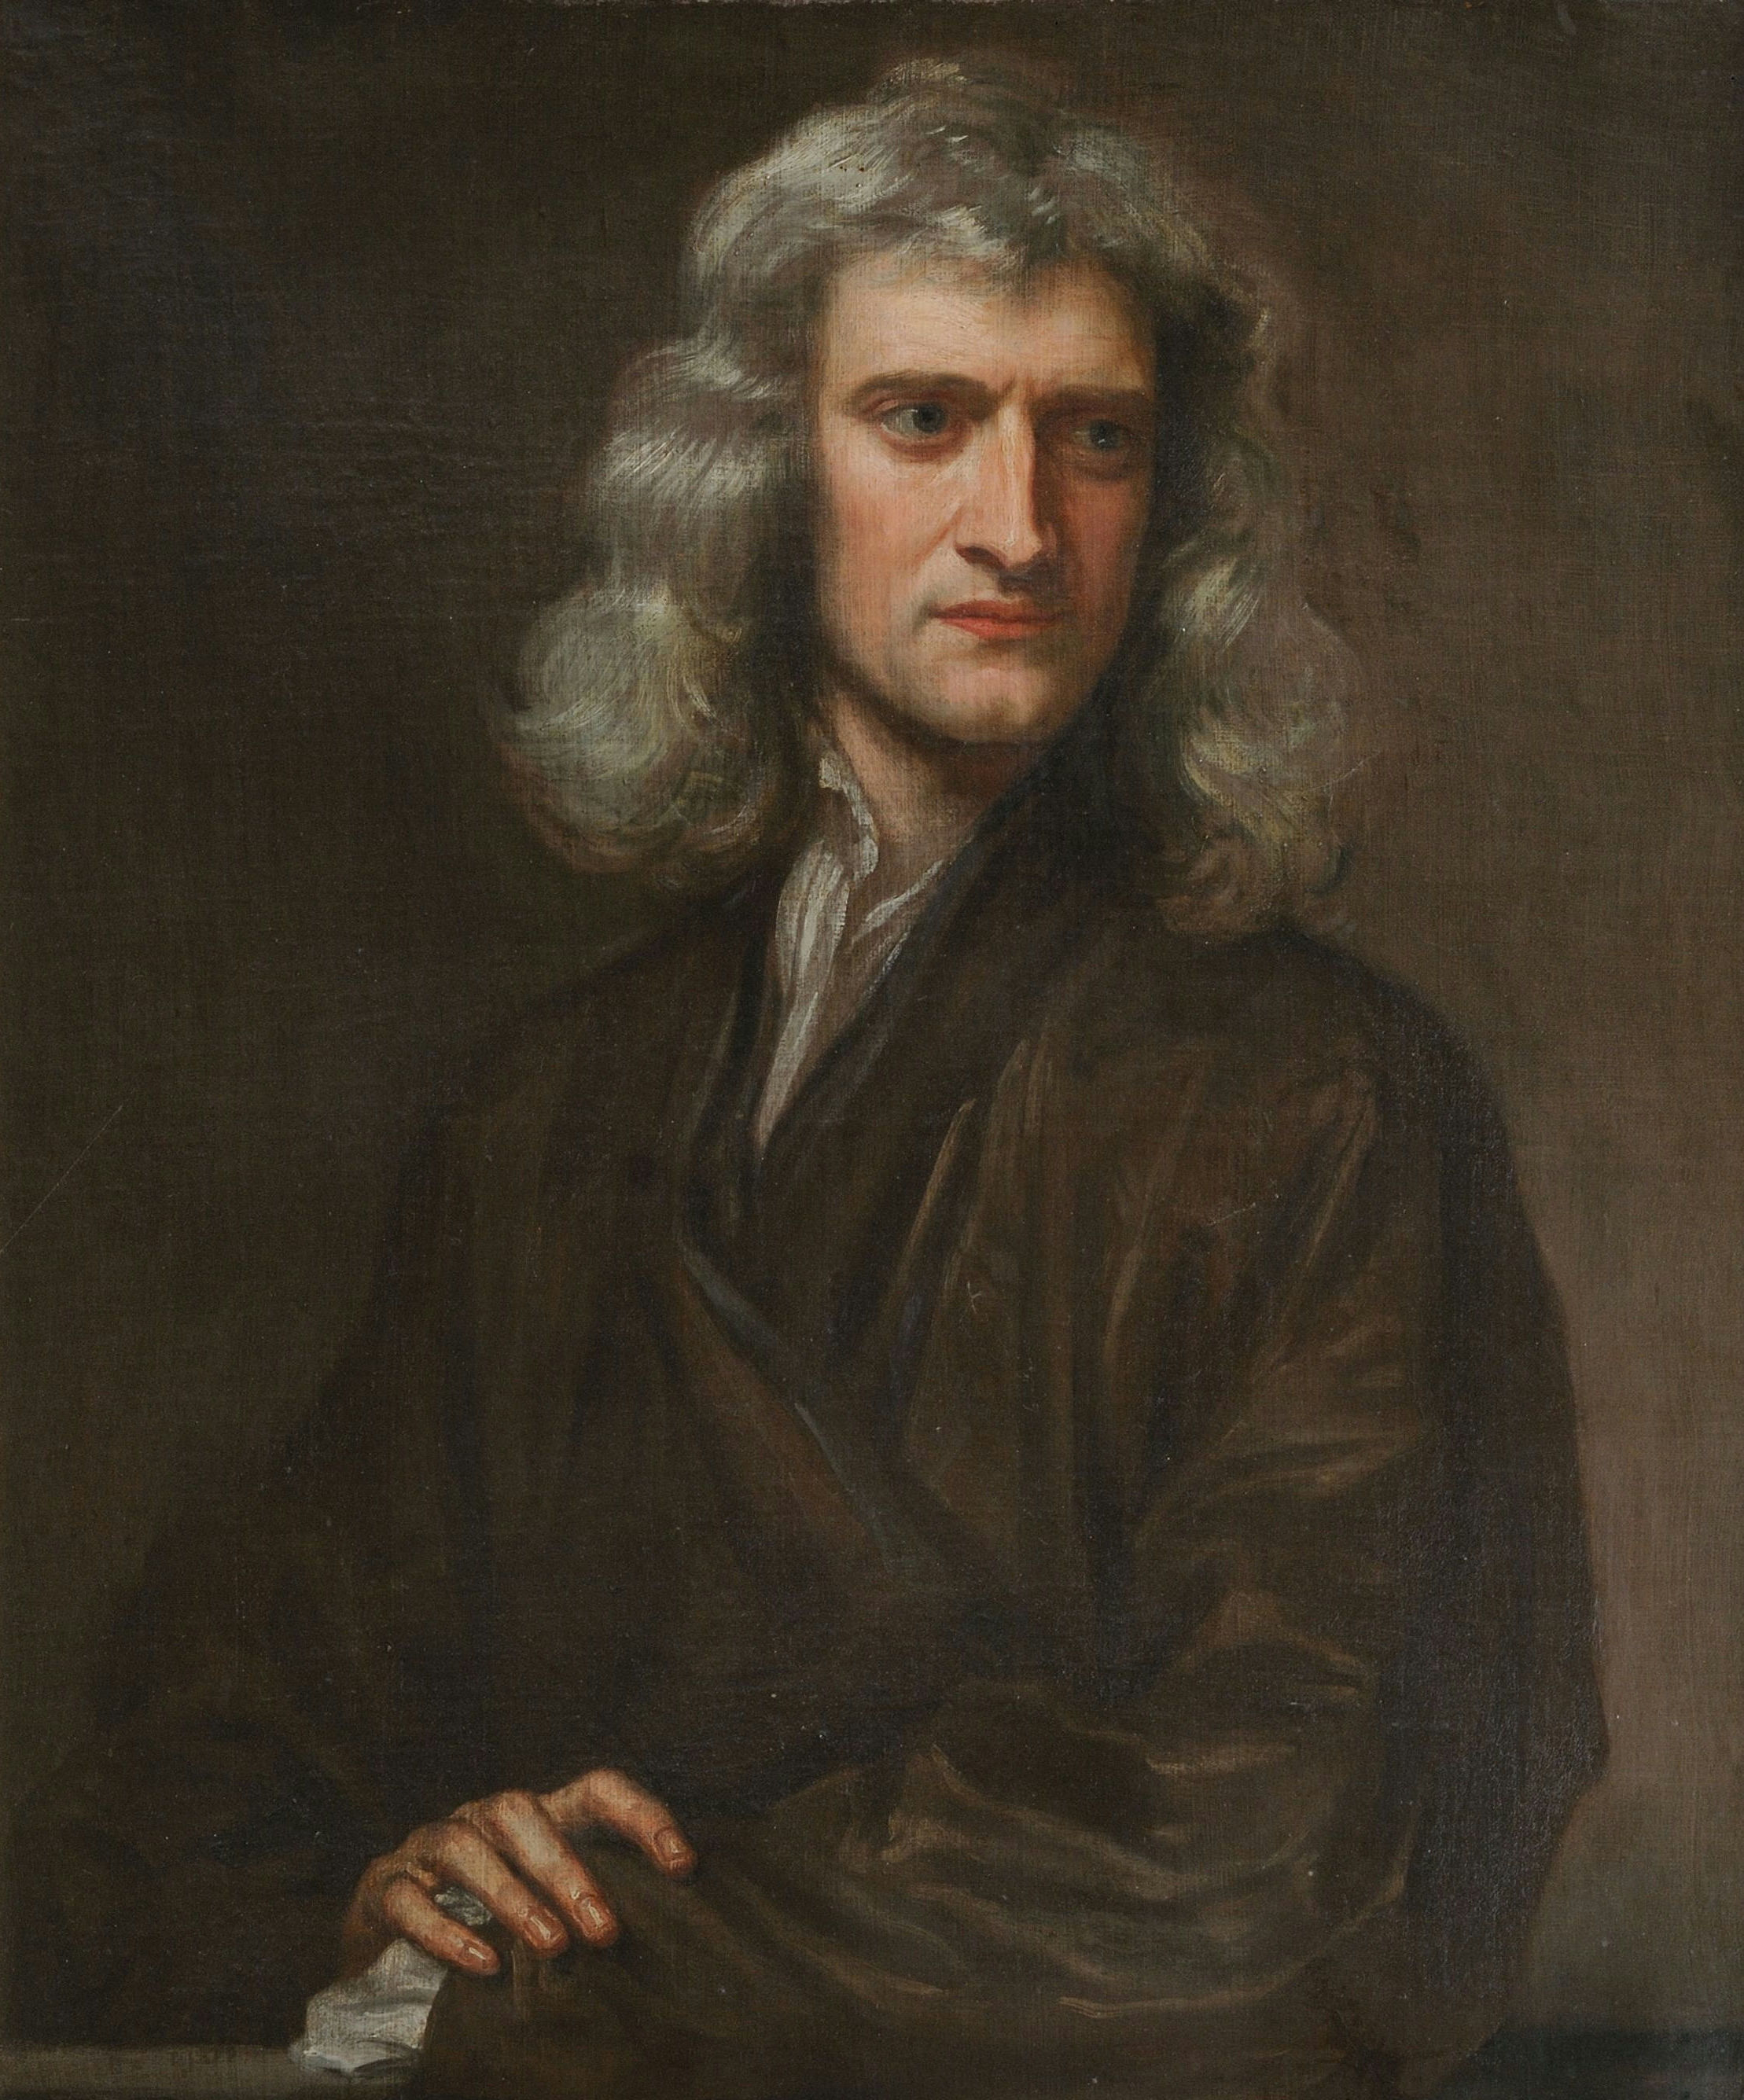 Isac Newton (https://en.wikipedia.org/wiki/Isaac_Newton)